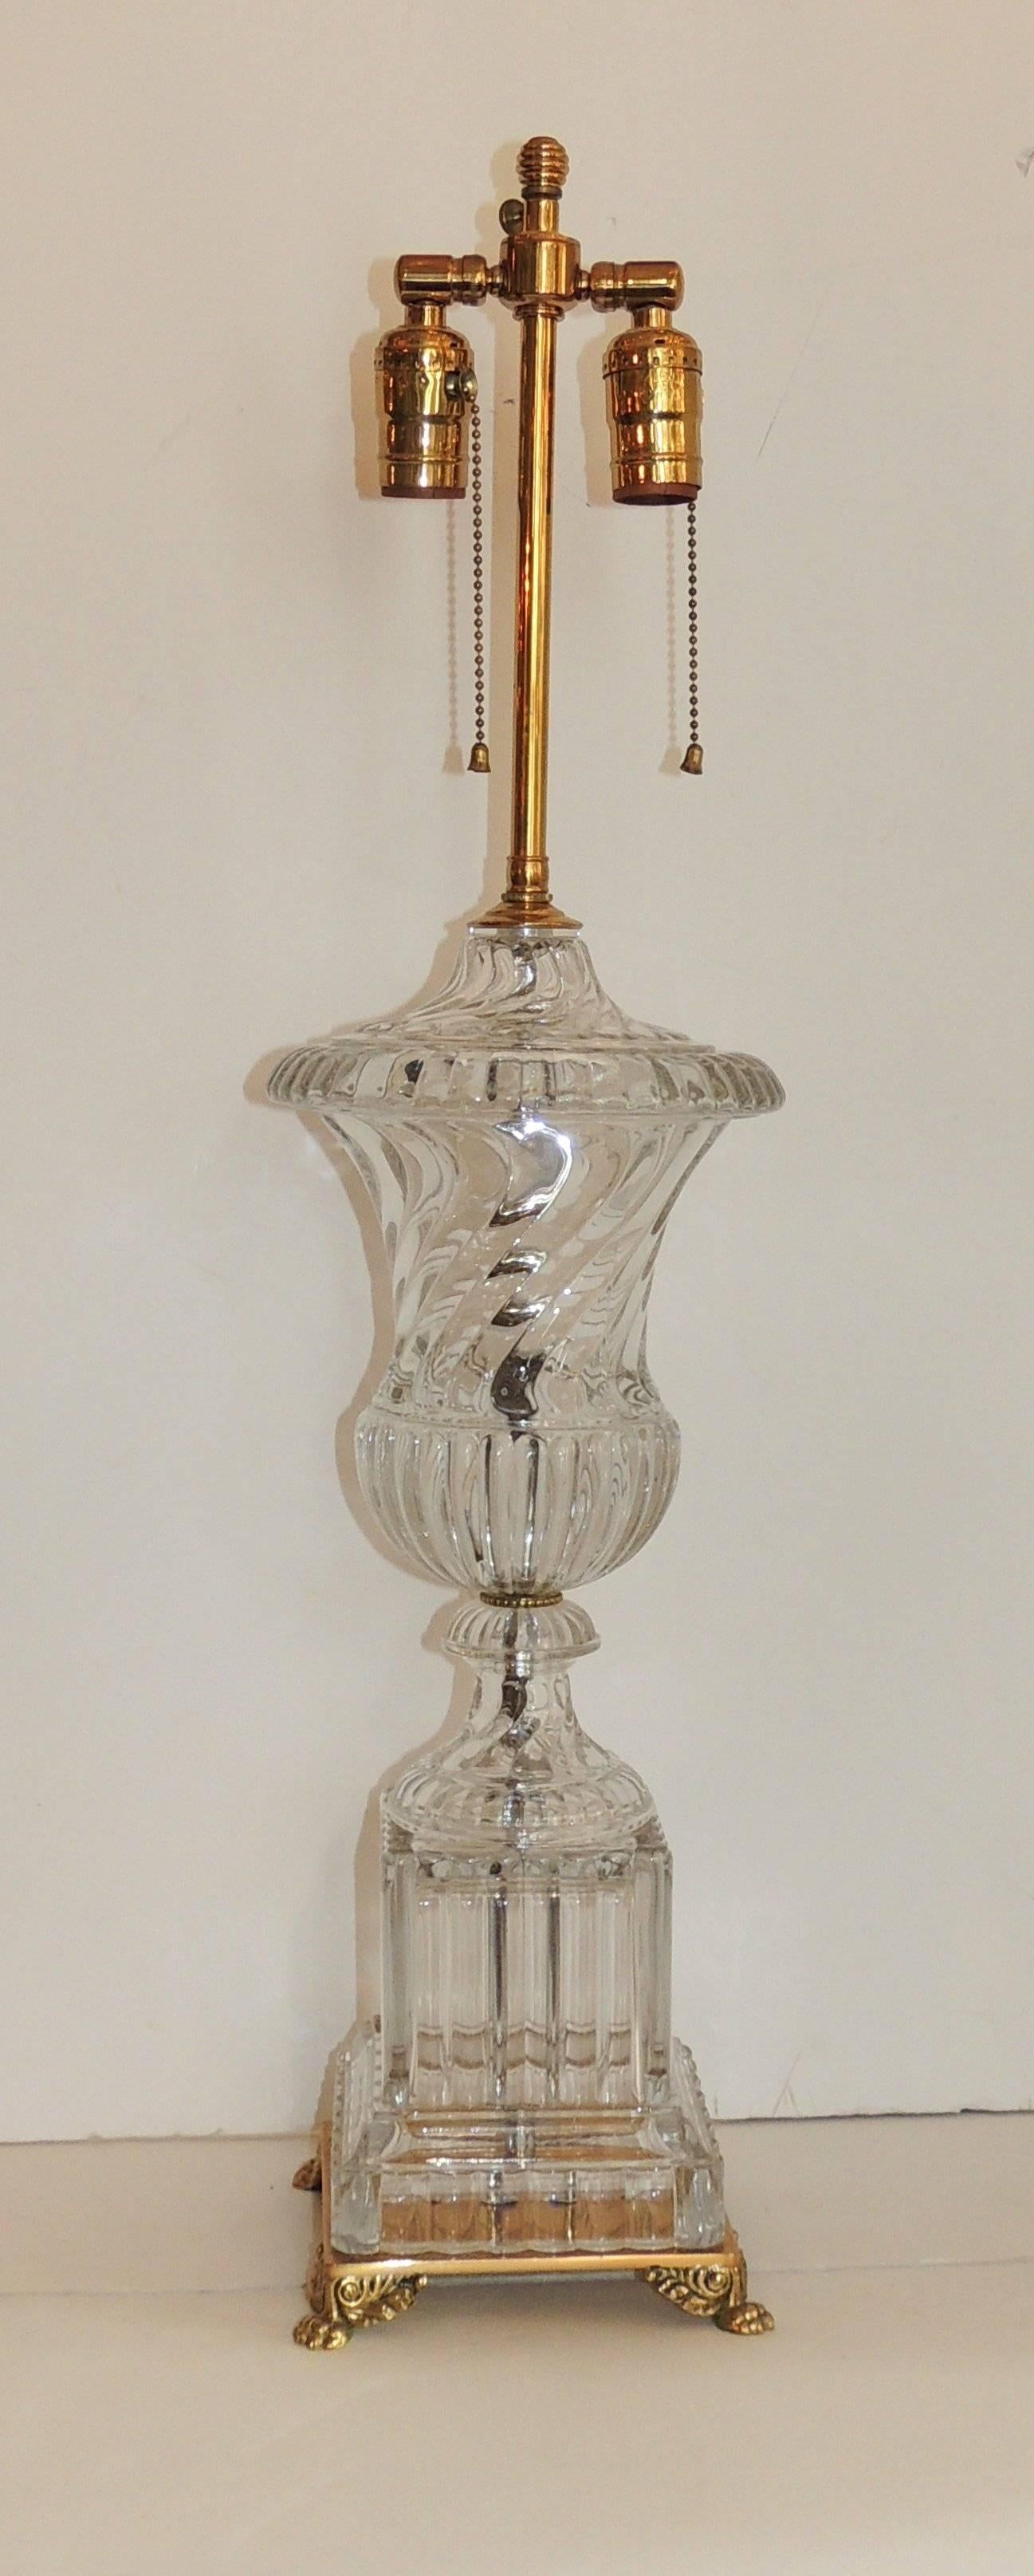 Wonderful pair of baccarat manner crystal swirl doré bronze urn neoclassical Regency lamps
Measures: 29" H x 6" W.